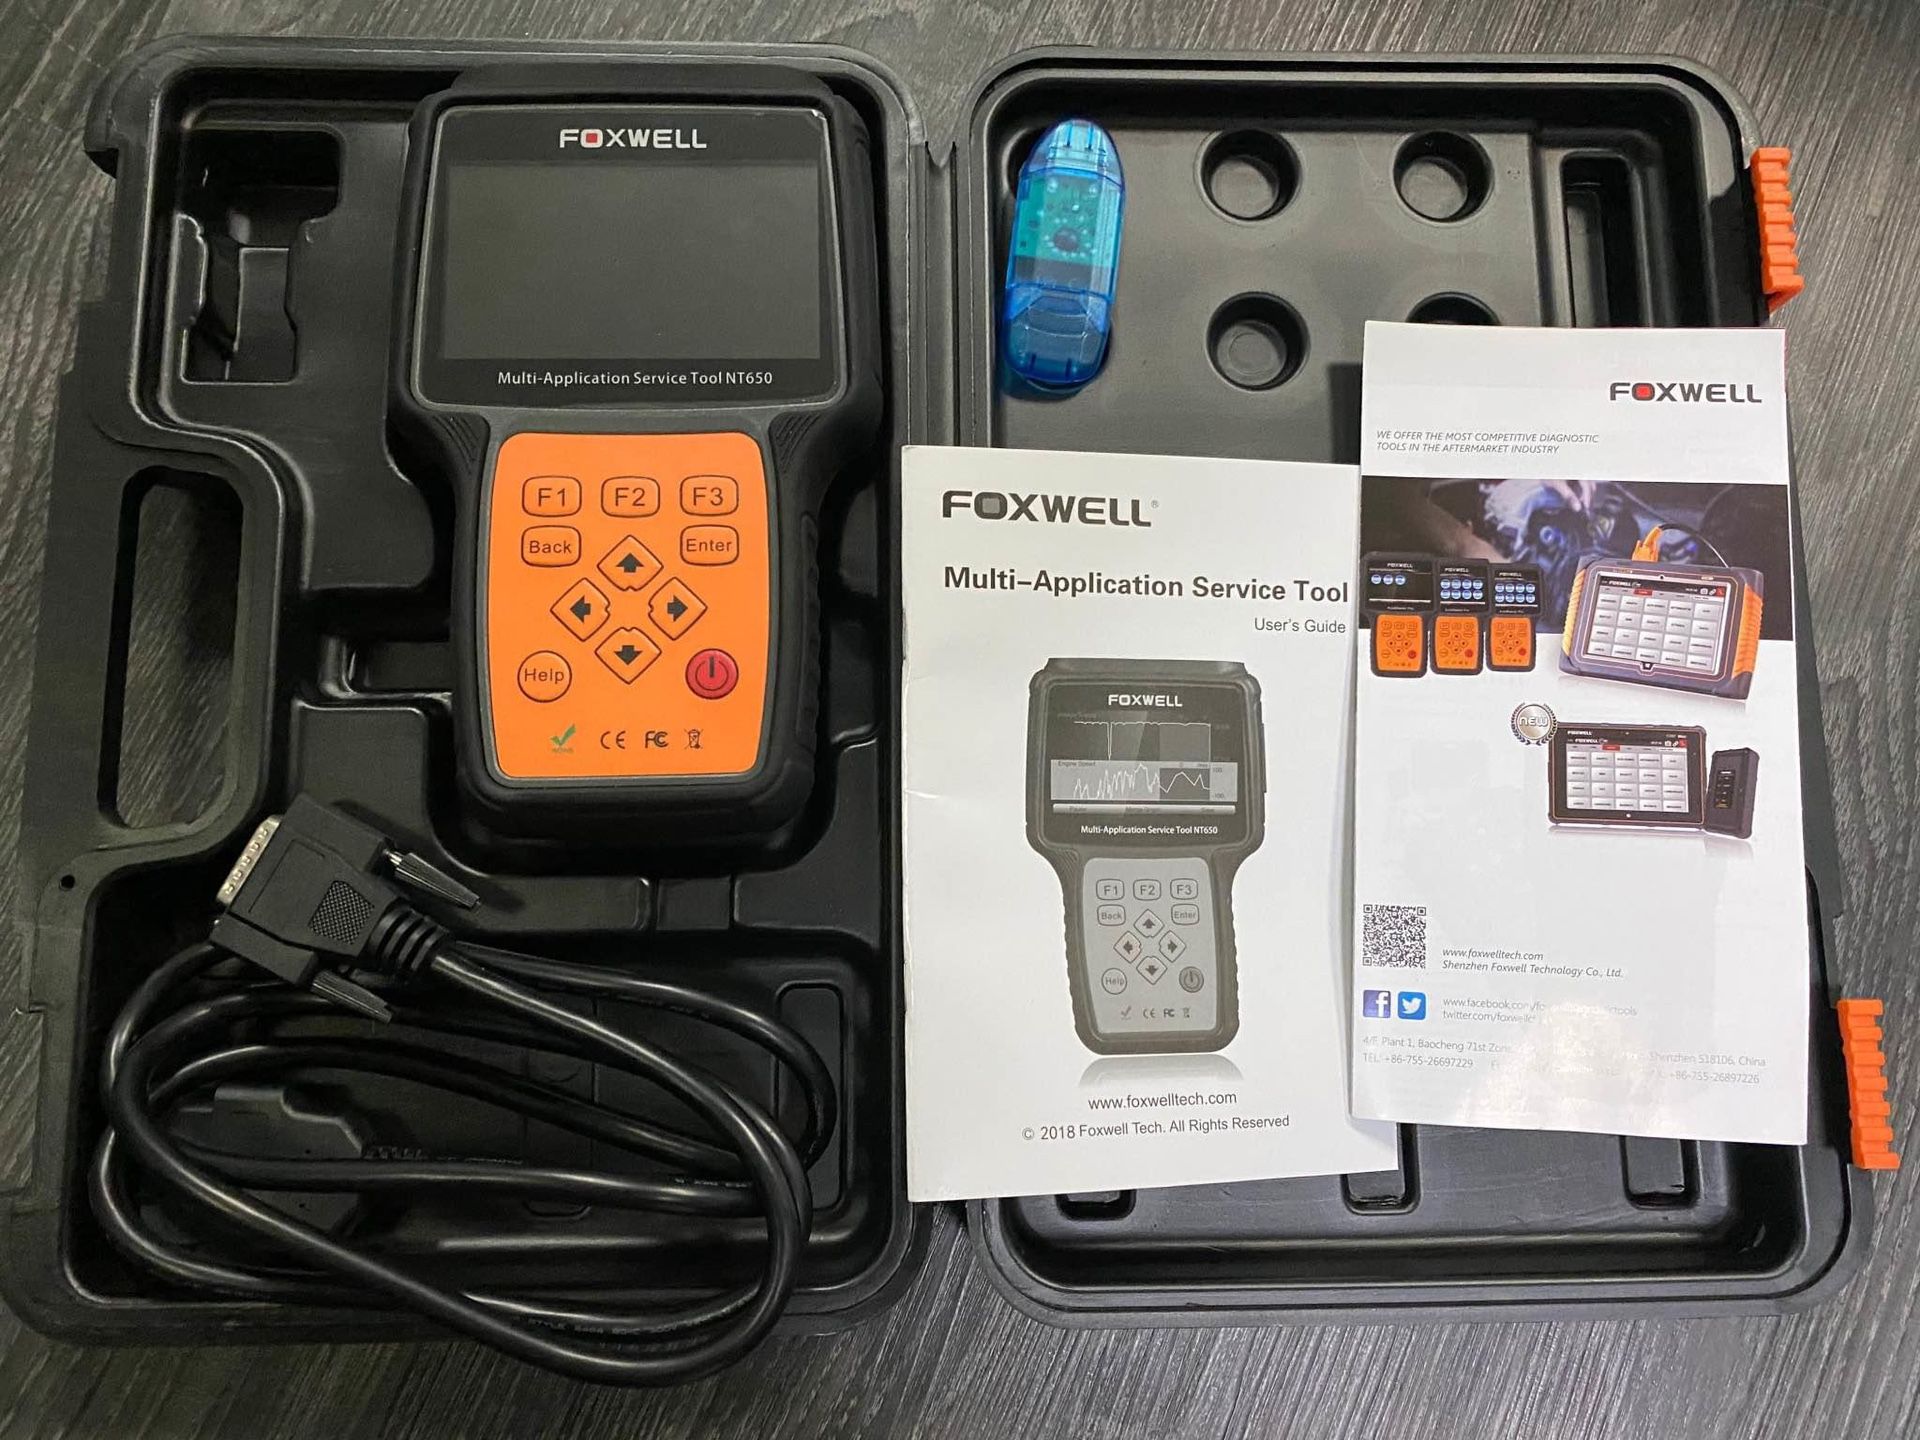 Foxwell multi-application service tool NT650